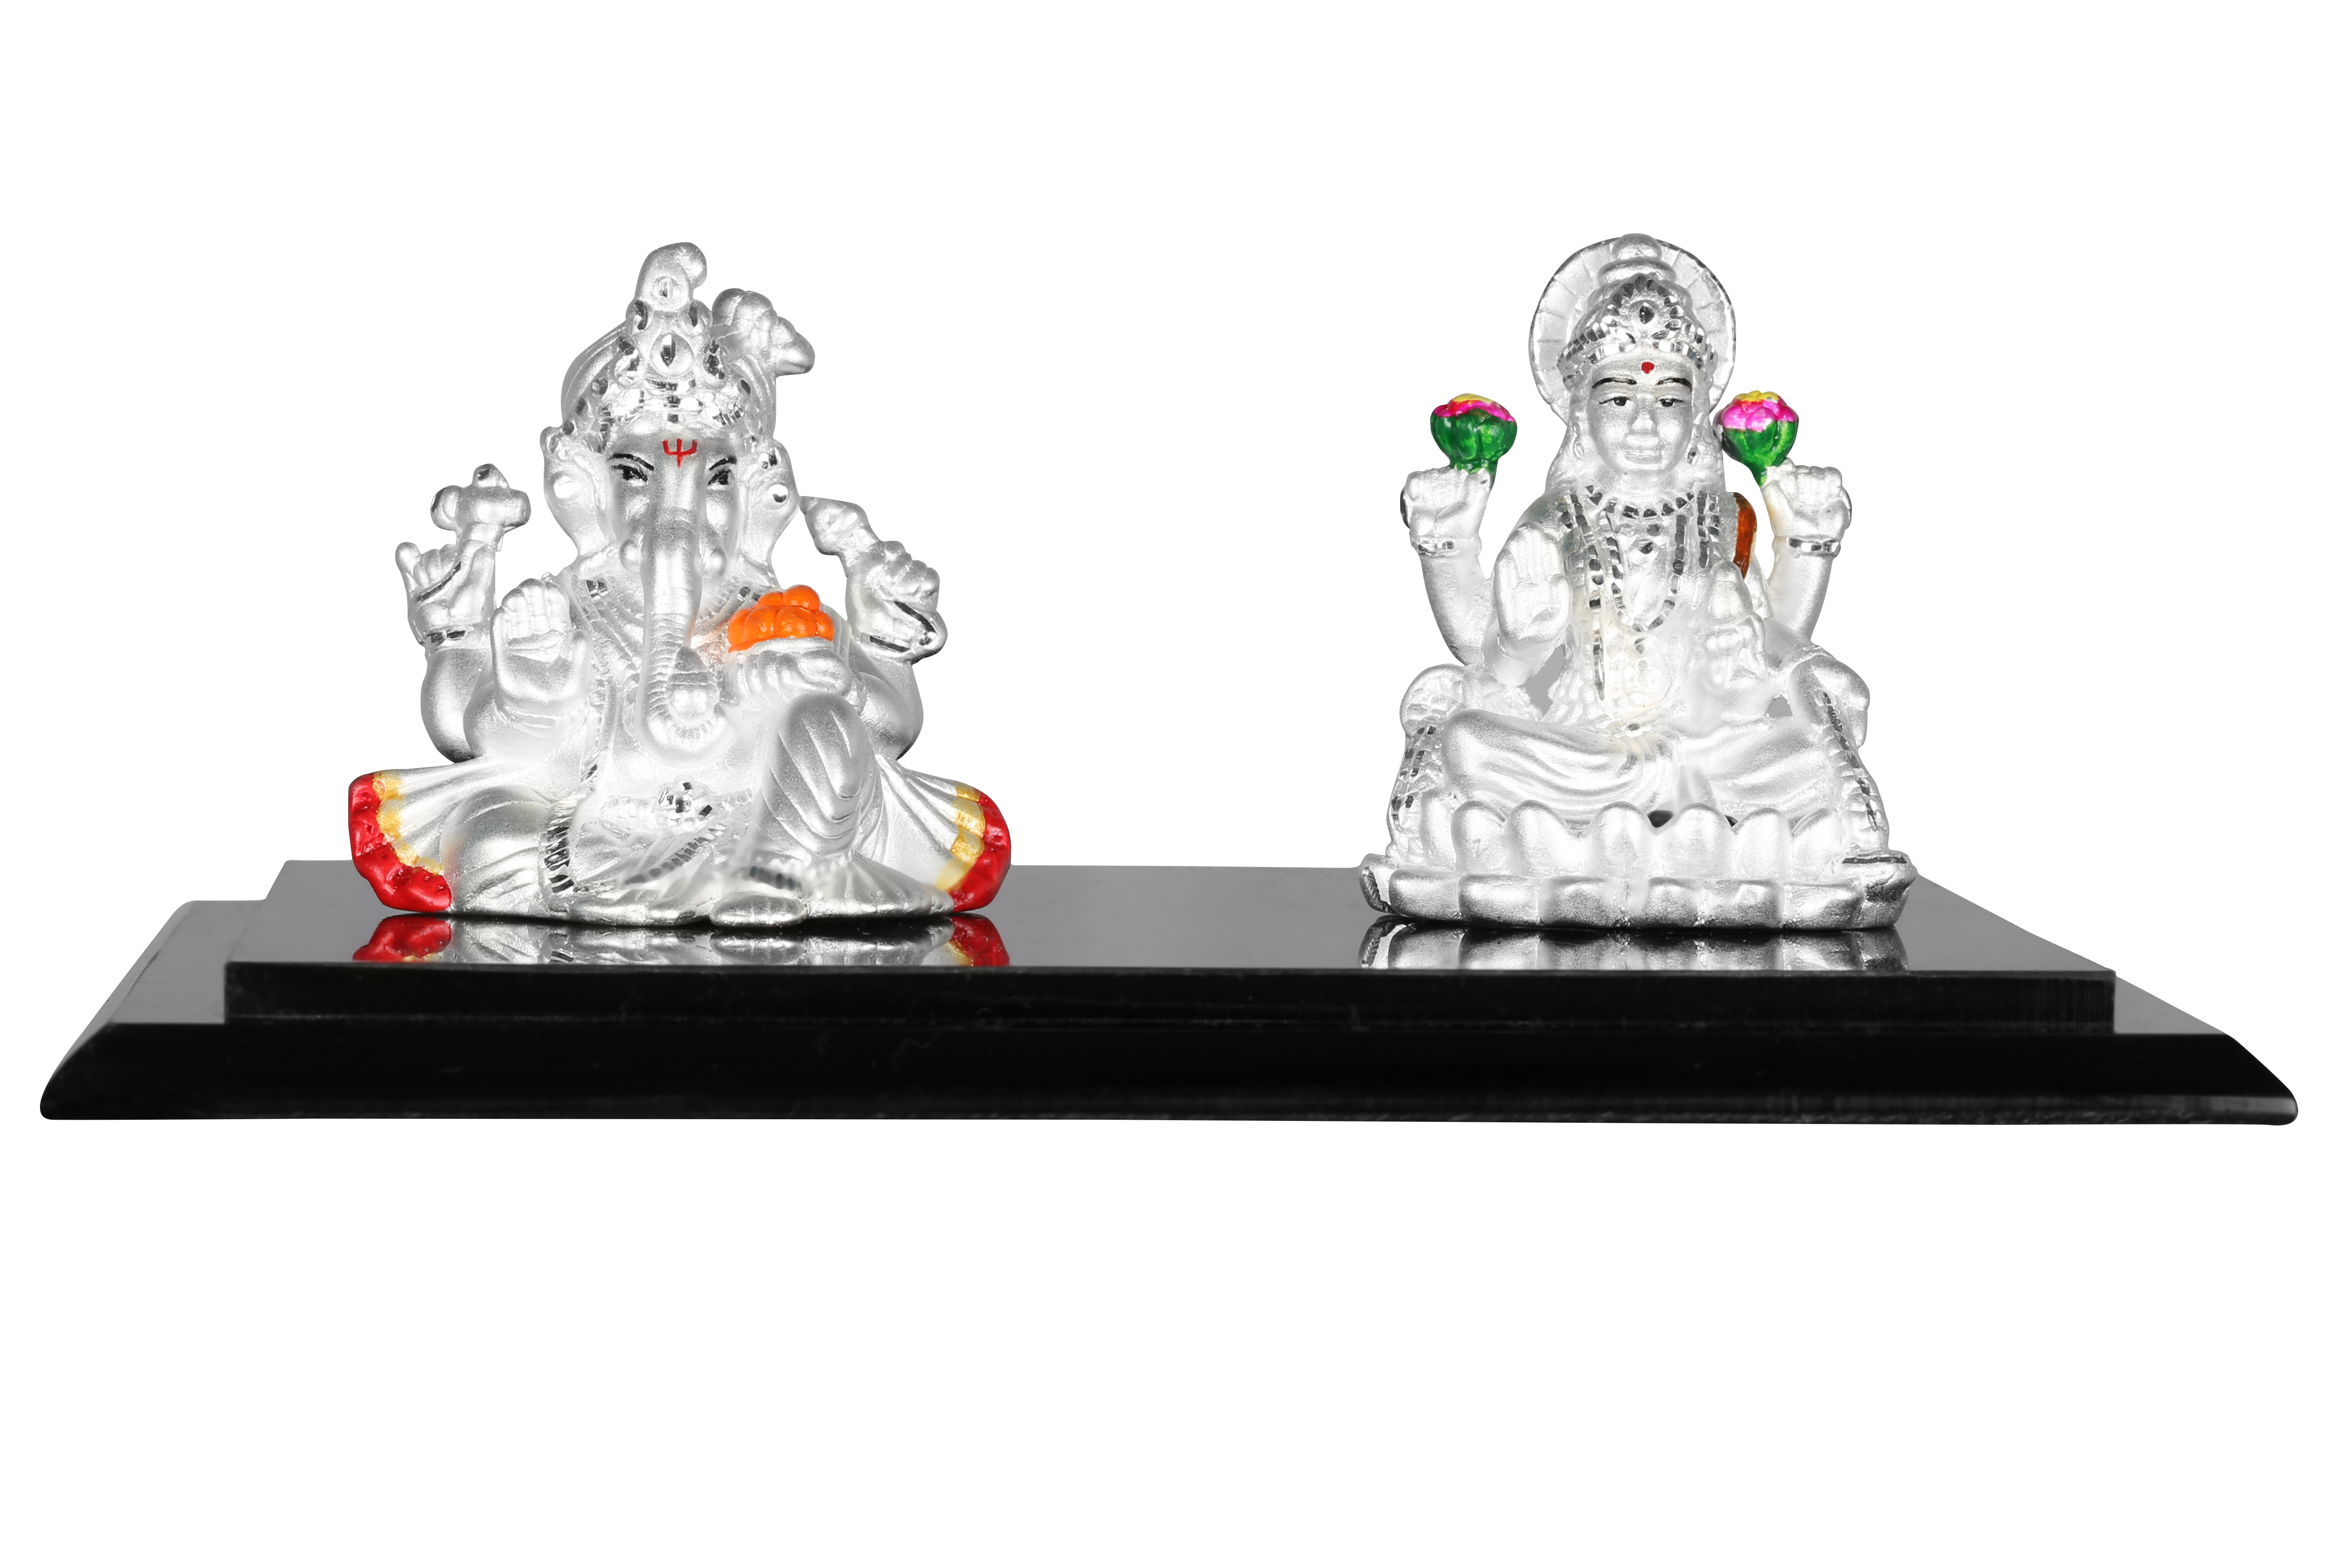 999 Pure Silver Ganesh Laxmi Idols By Krysaliis Isvara-Kriglx_07